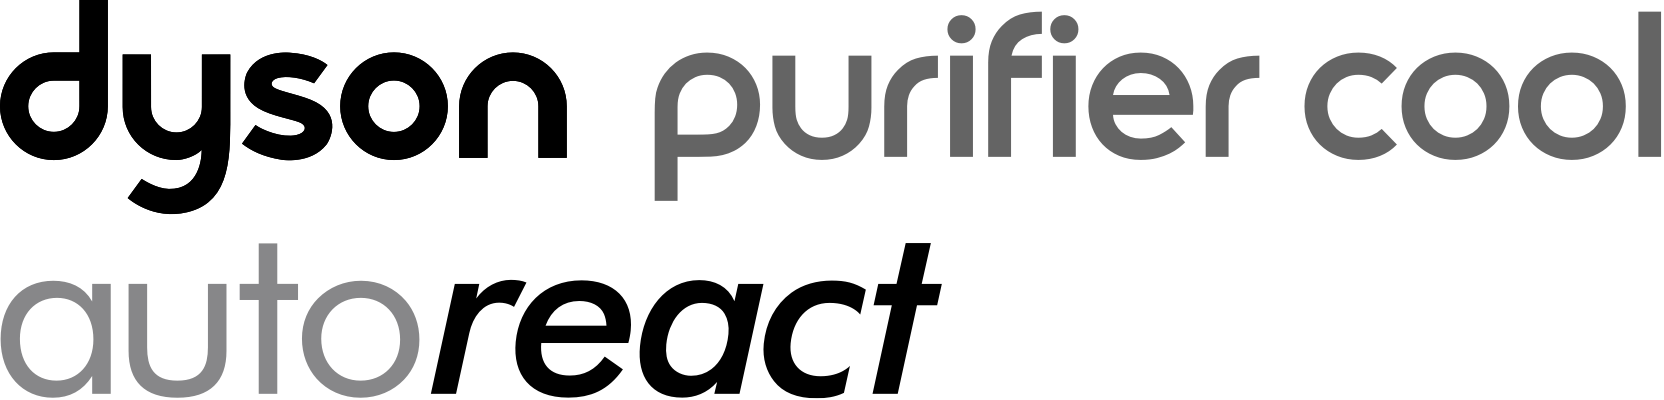 Dyson Purifier Cool autoreact logo